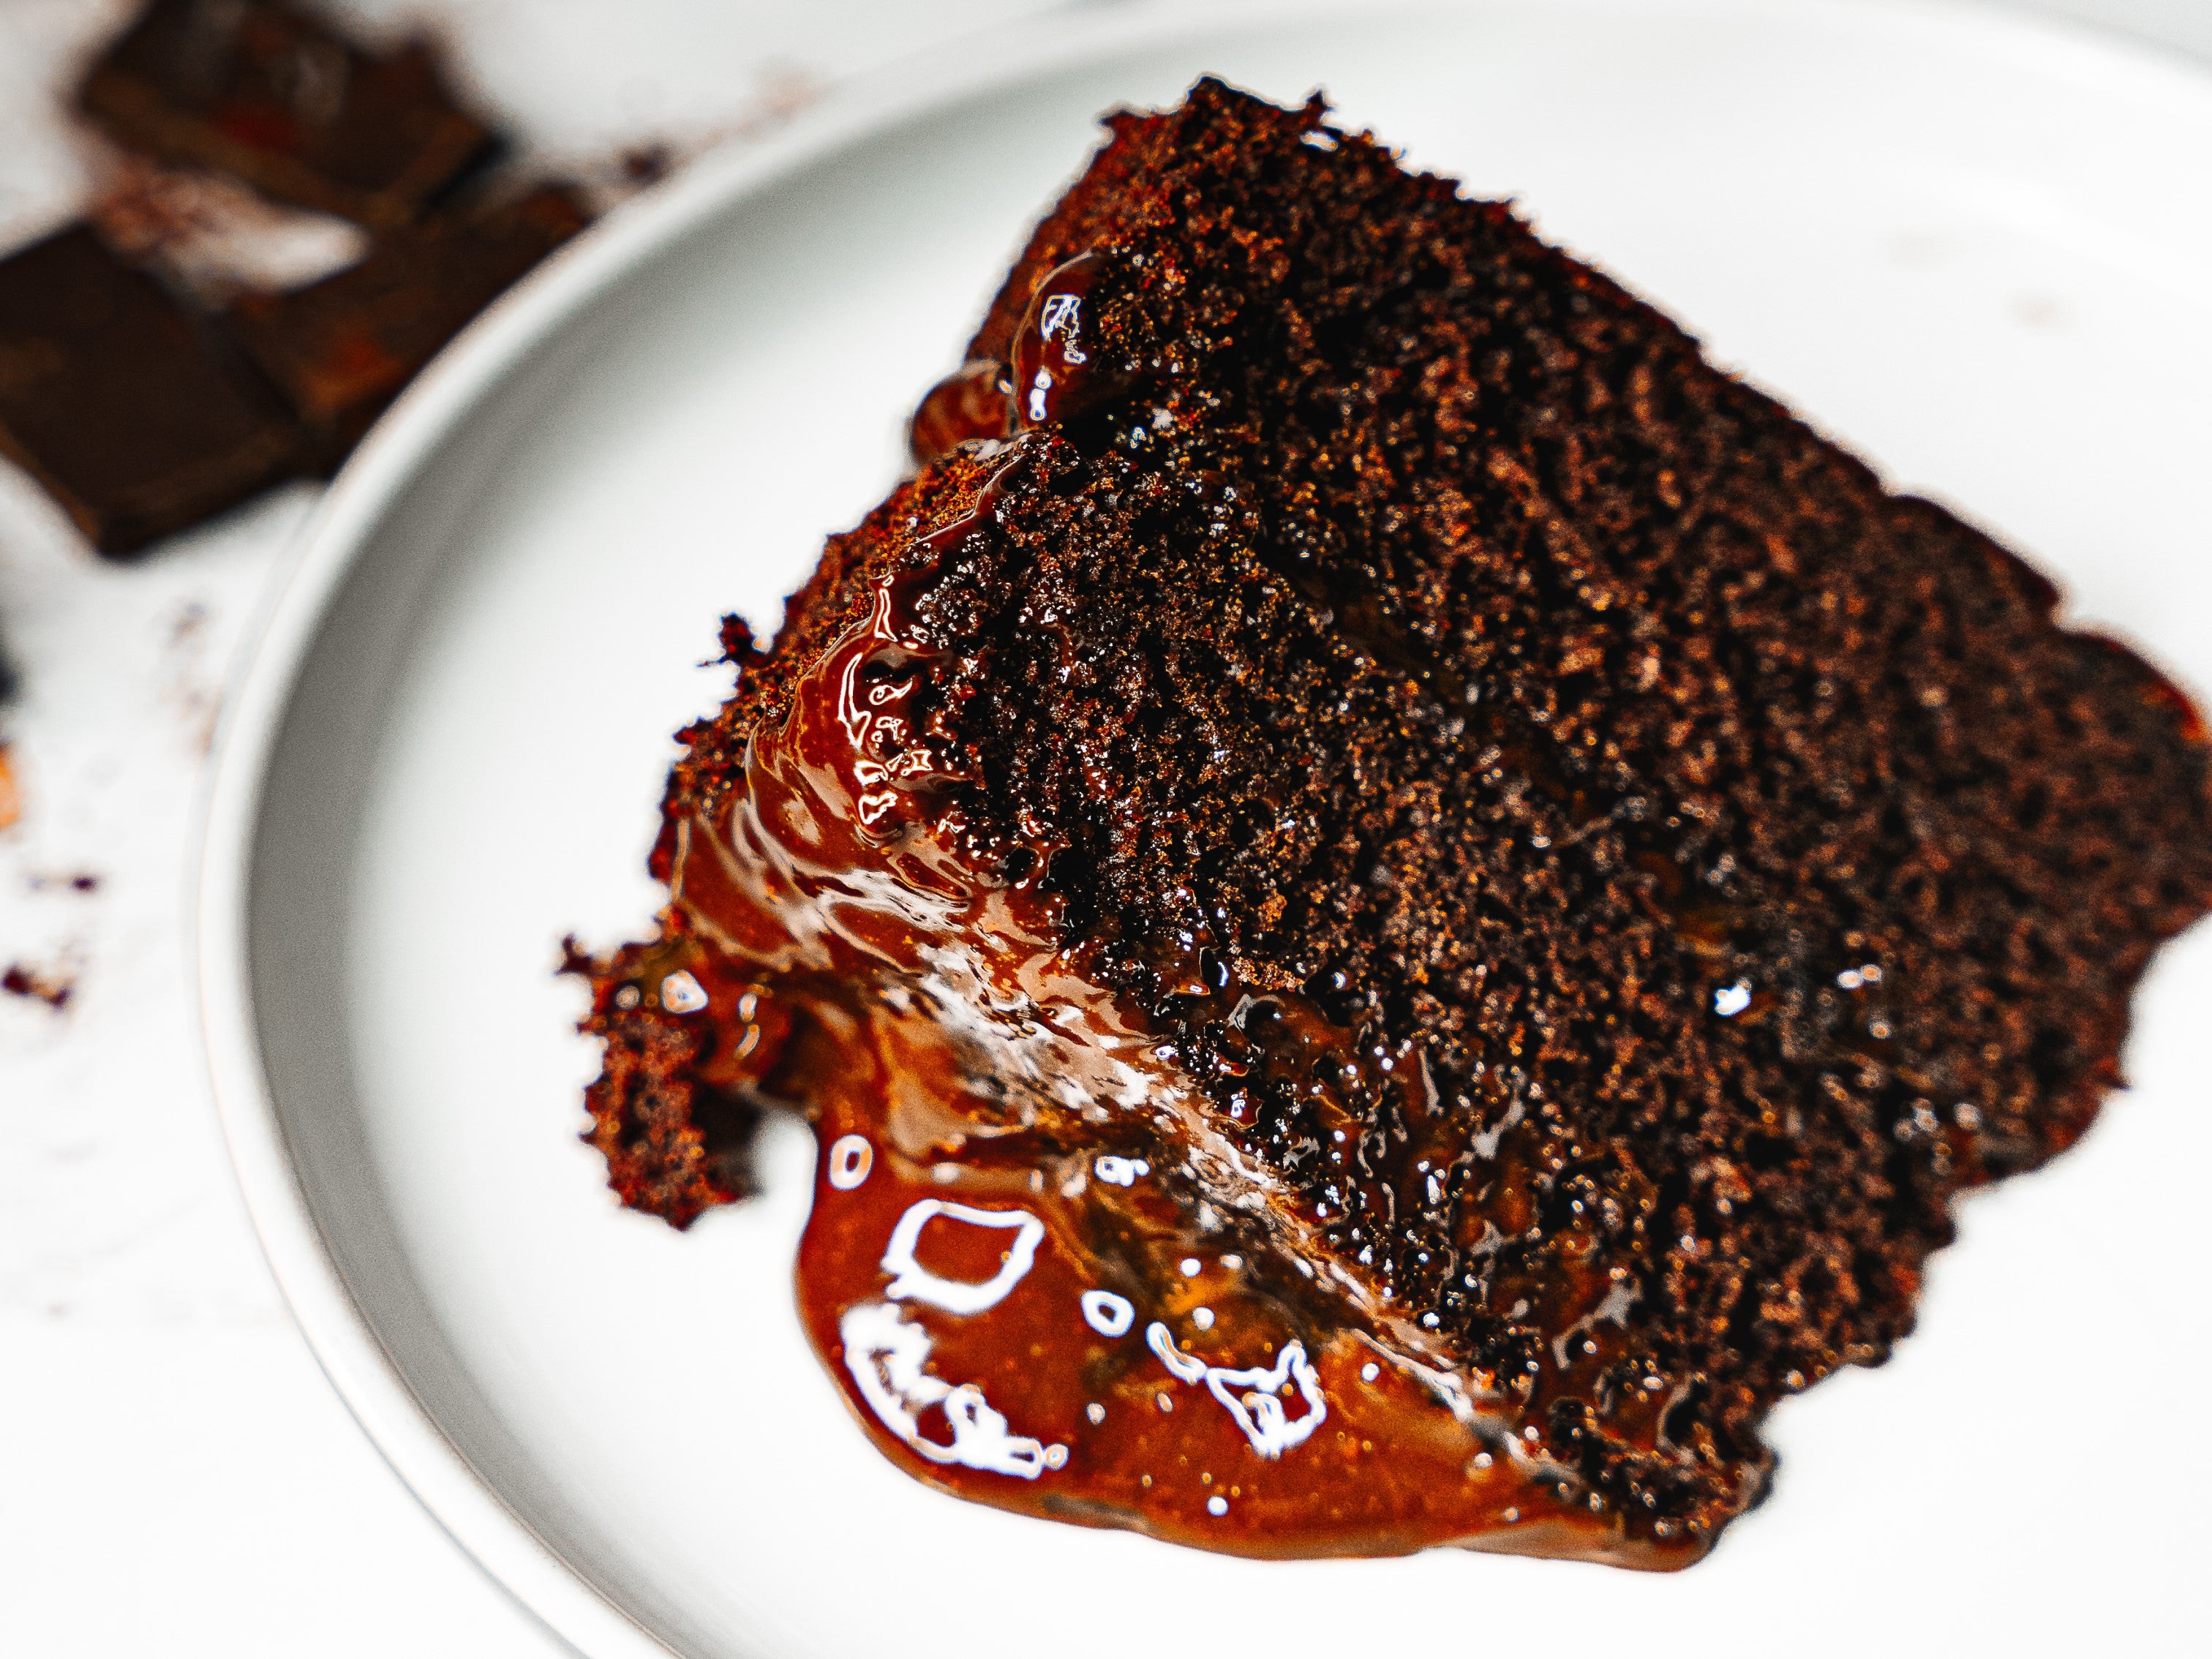 Slice of freshly-baked chocolate cake made using Nigella Lawson's recipe